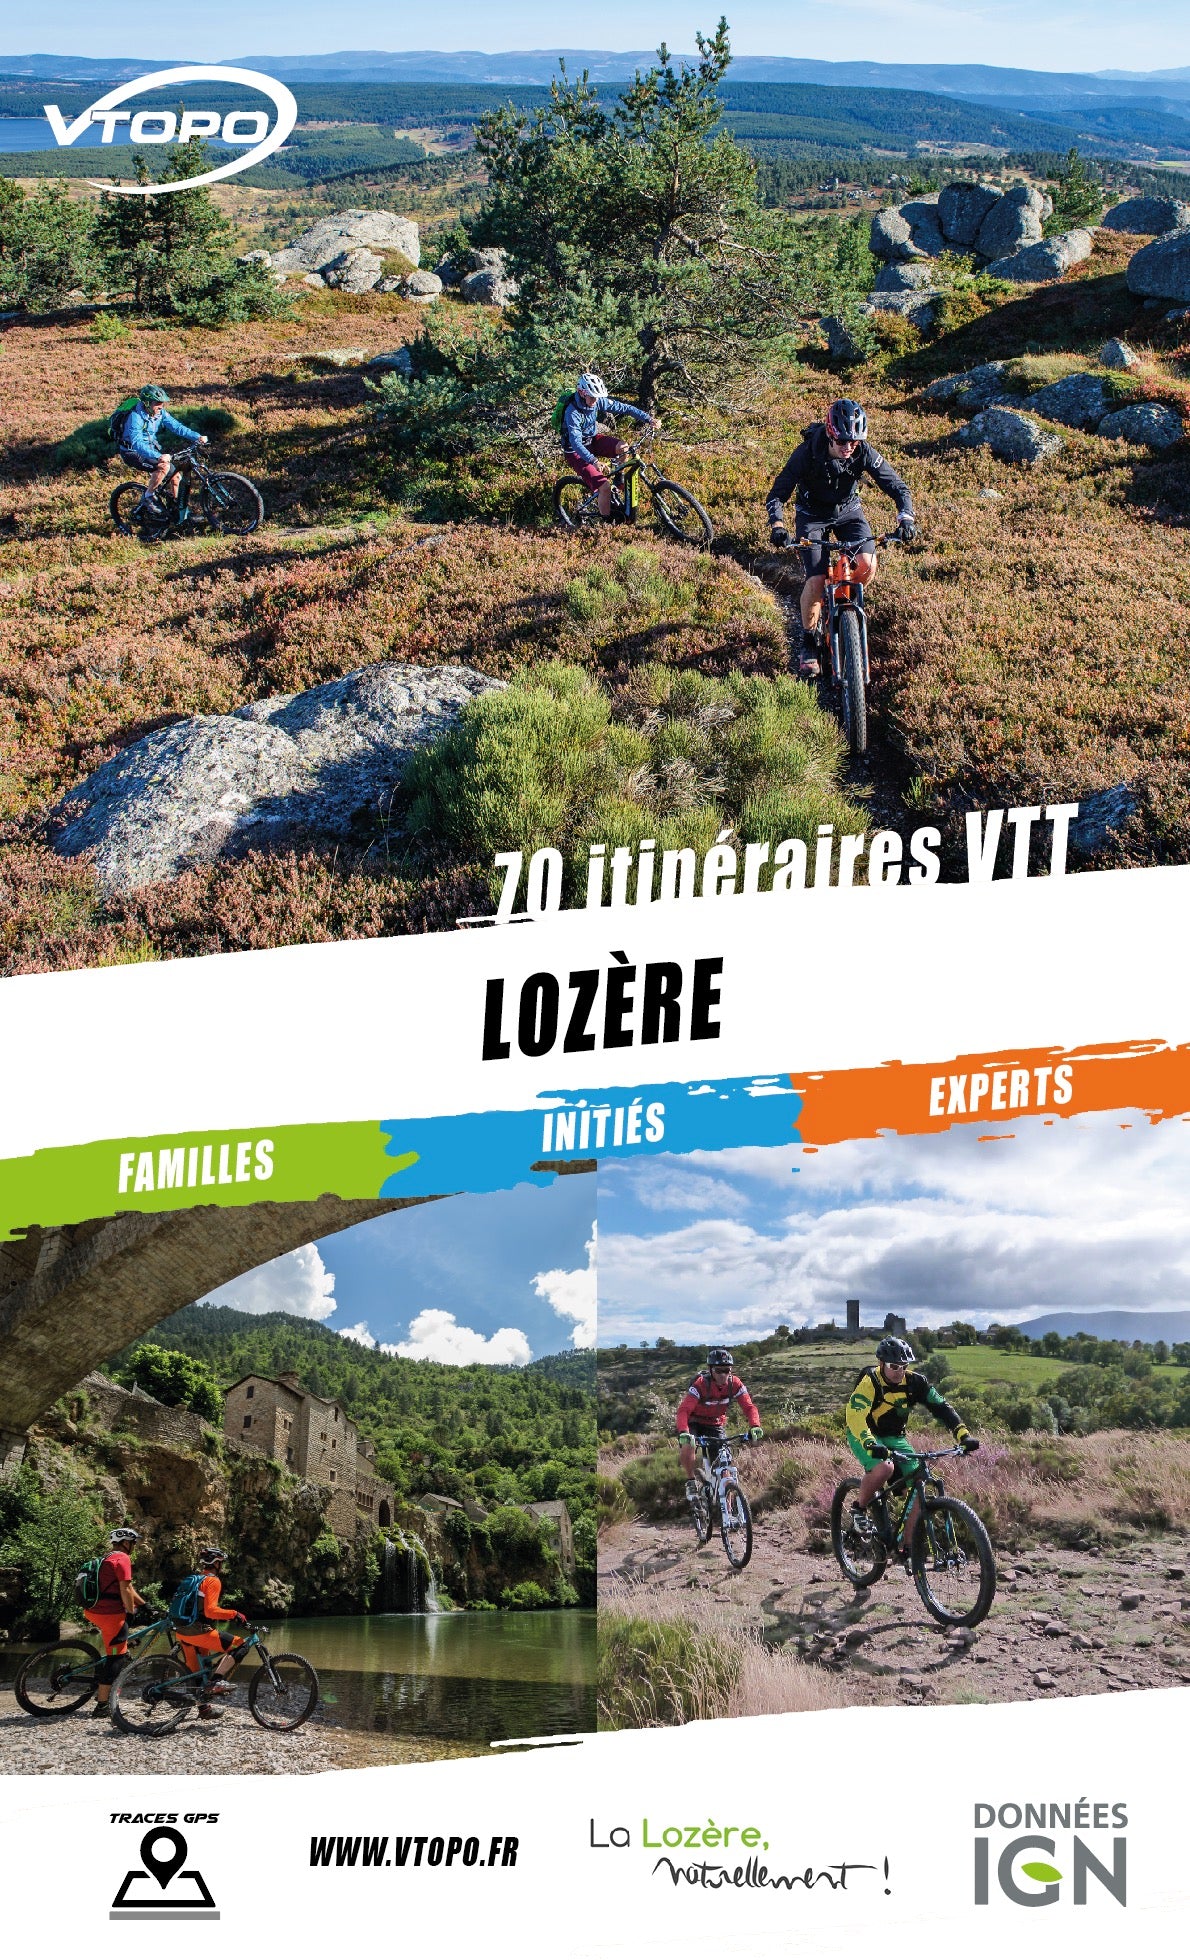 VTOPO VTT Lozère - 2nd edition